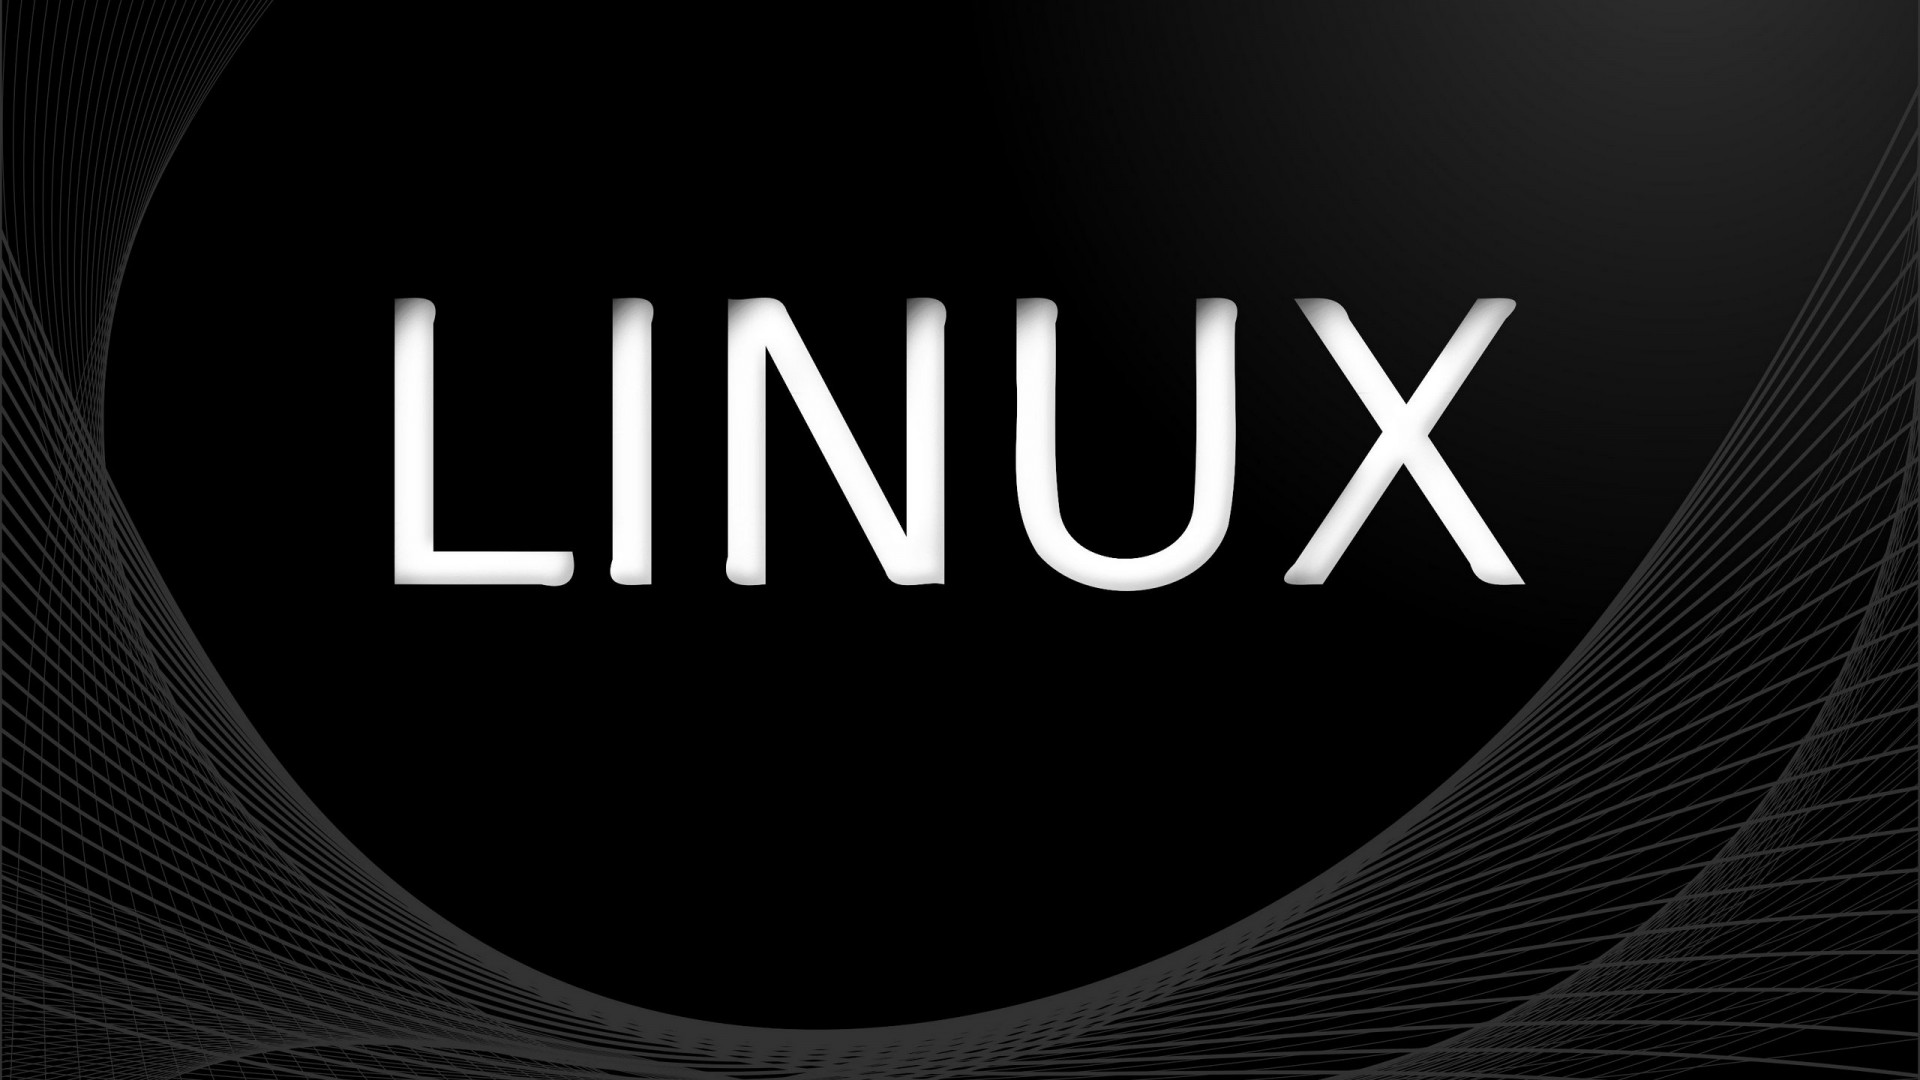 Linuxov tapeta | 1920x1080. Tapeta, pozad na plochu Windows